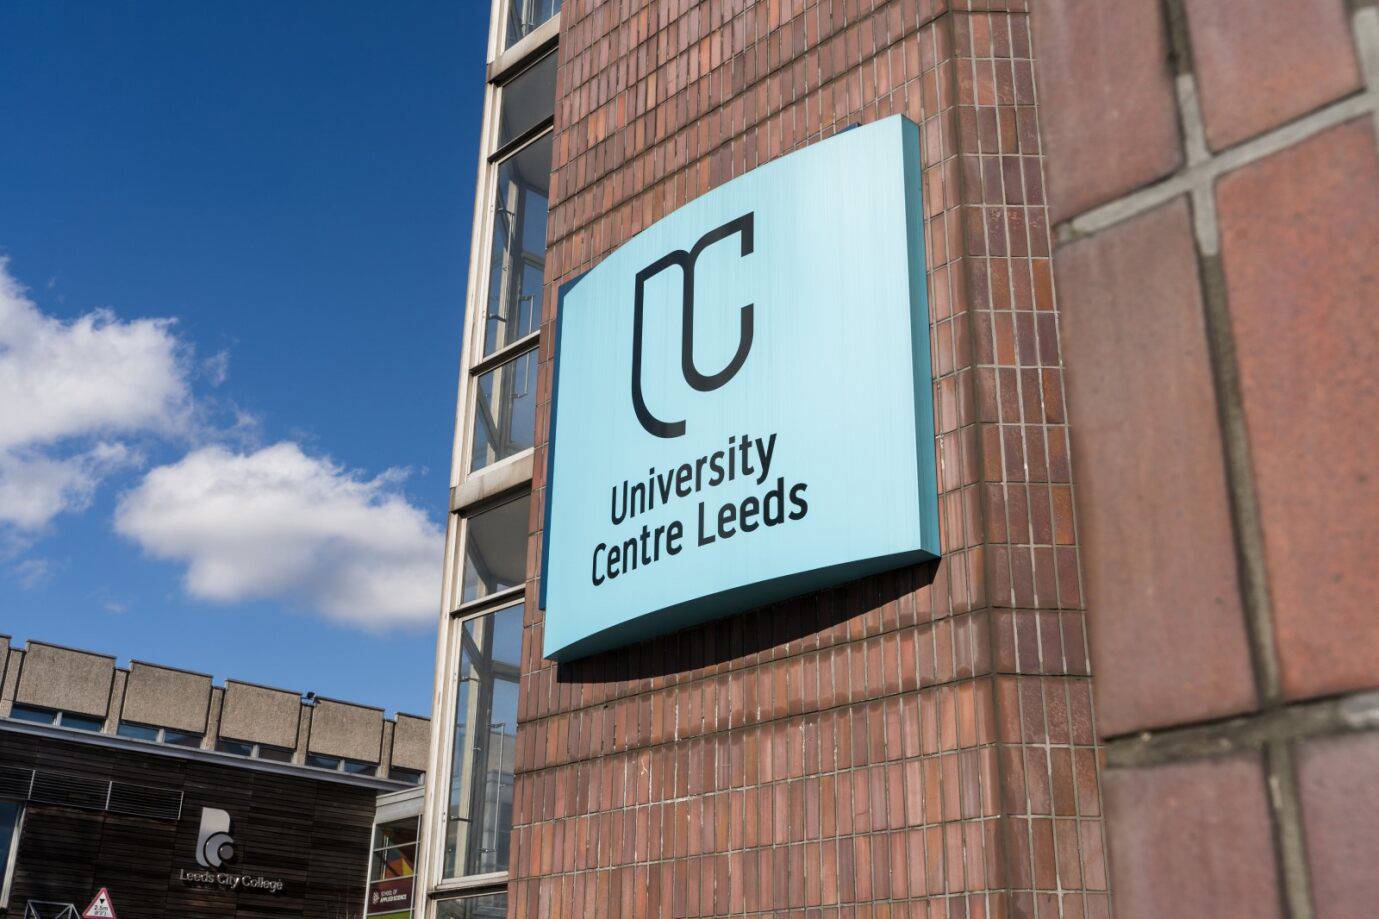 University centre leeds sign on side of building